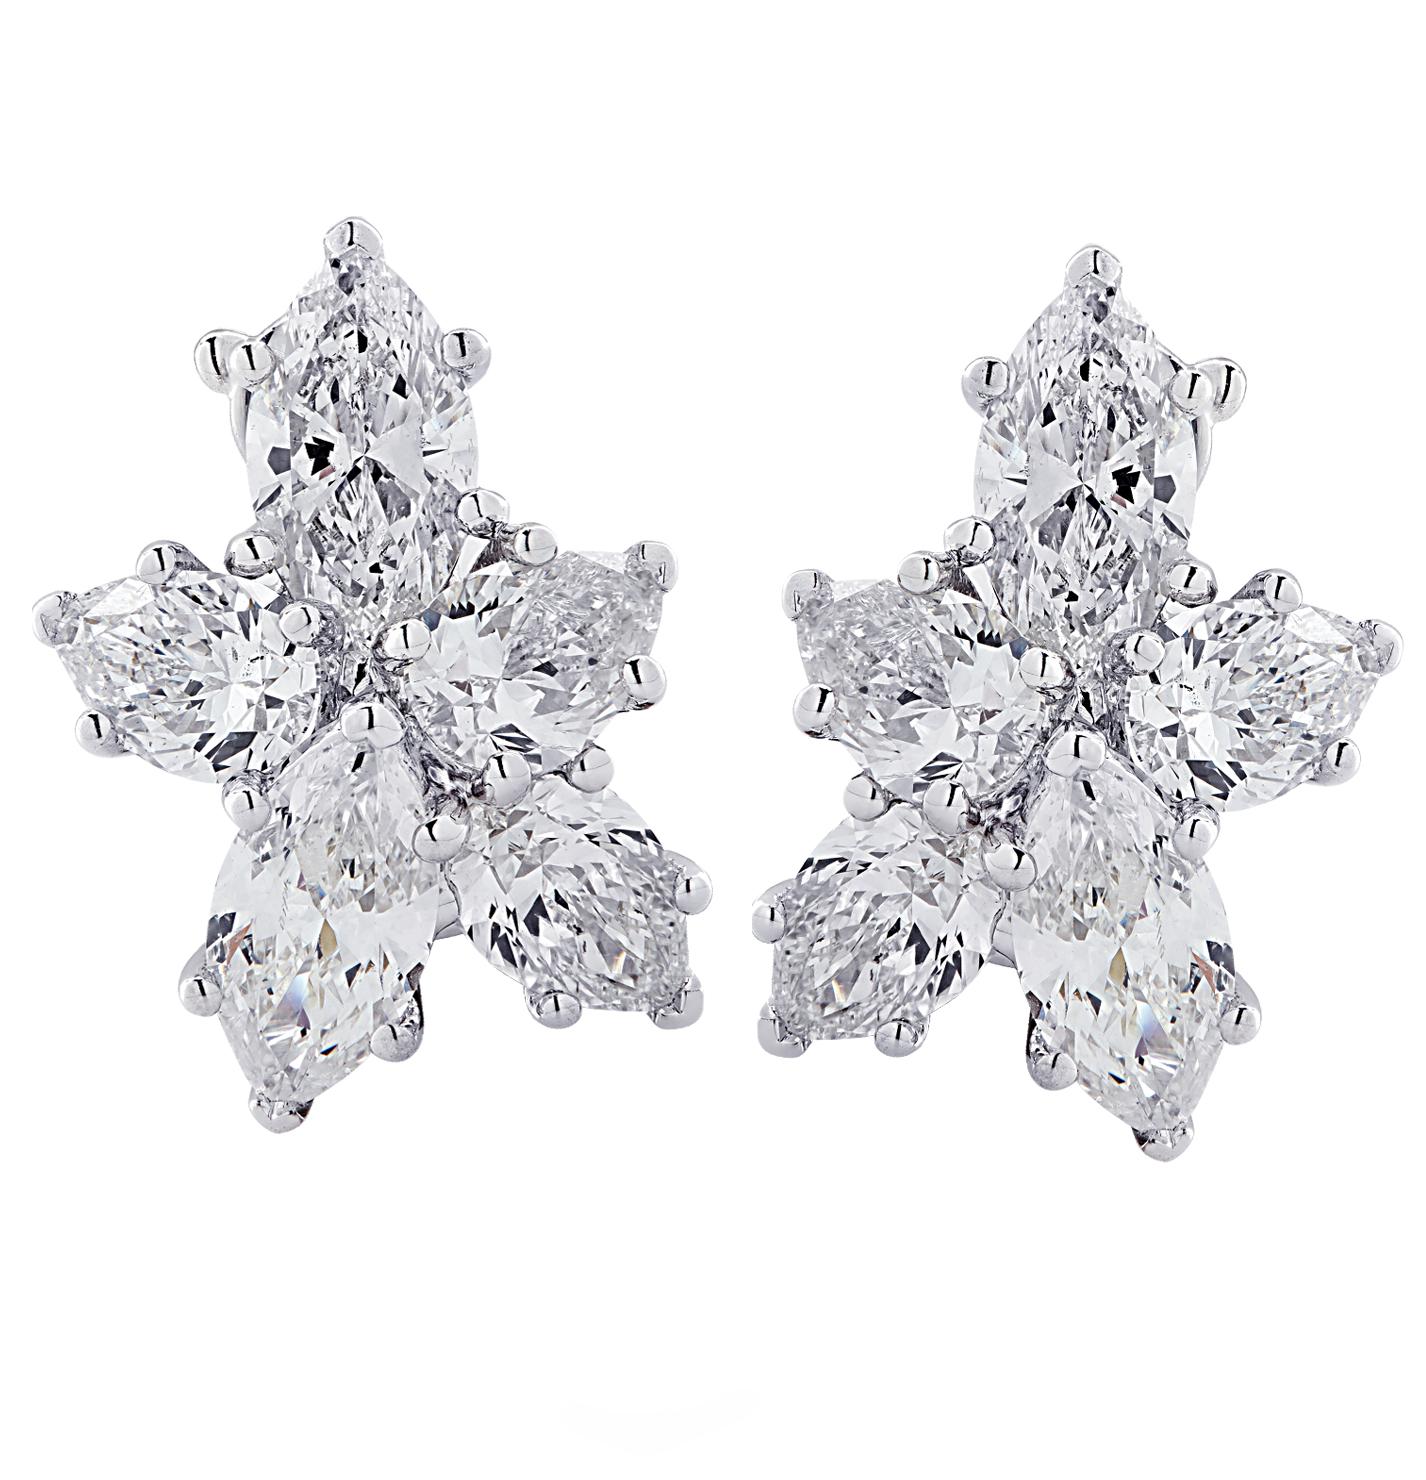 Modern Vivid Diamonds 3.64 Carat Diamond Cluster Earrings